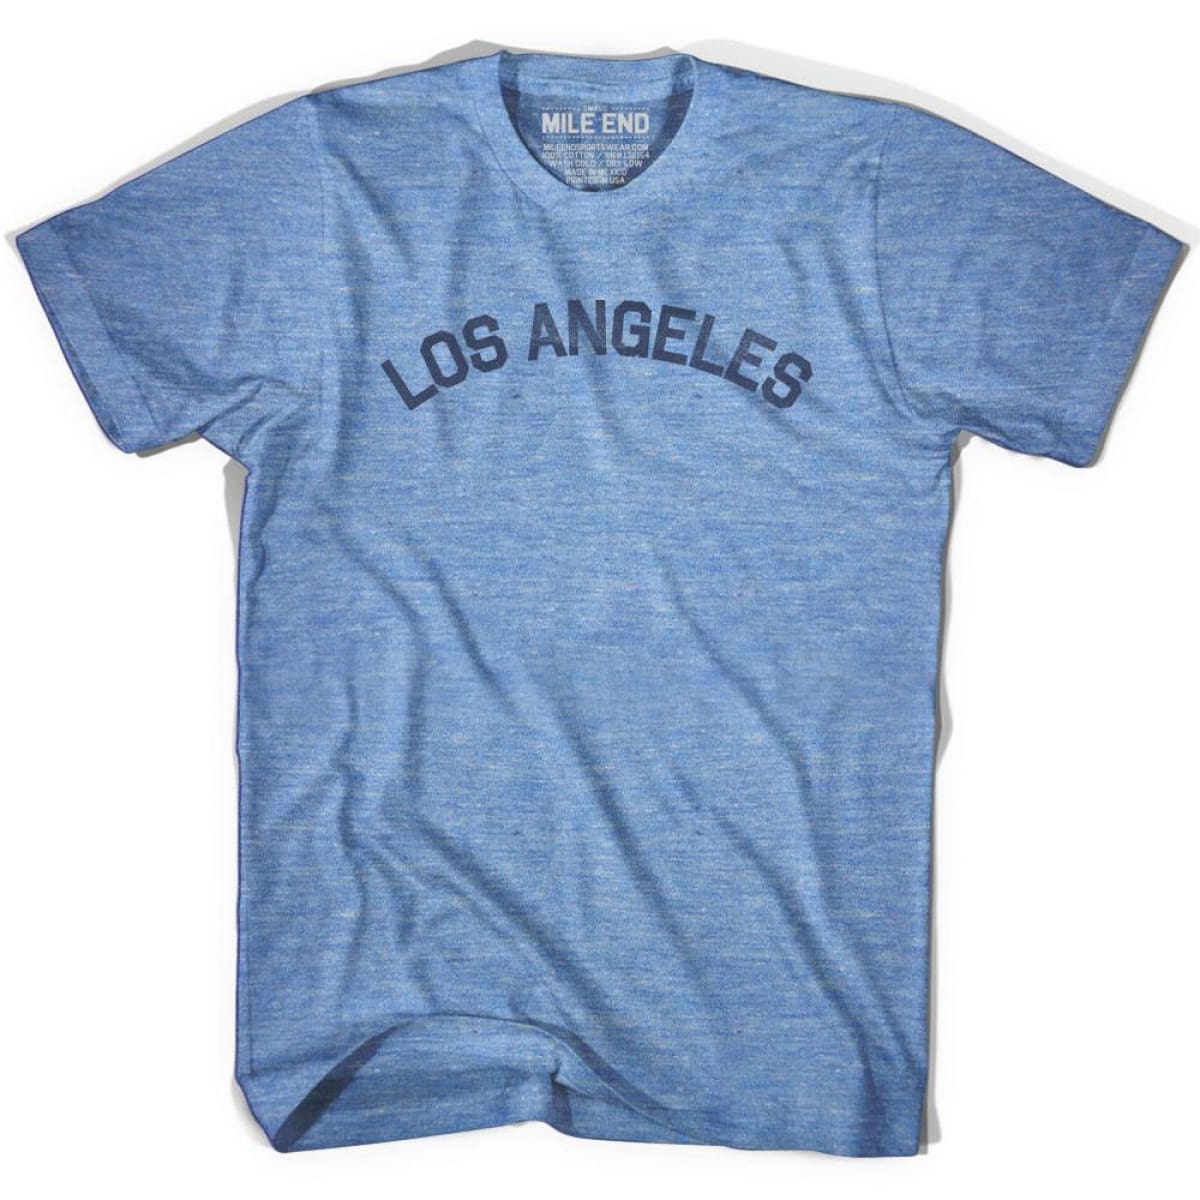 Los Angeles Vintage T-shirt for Sale | Mile End Sportswear, Mile End ...